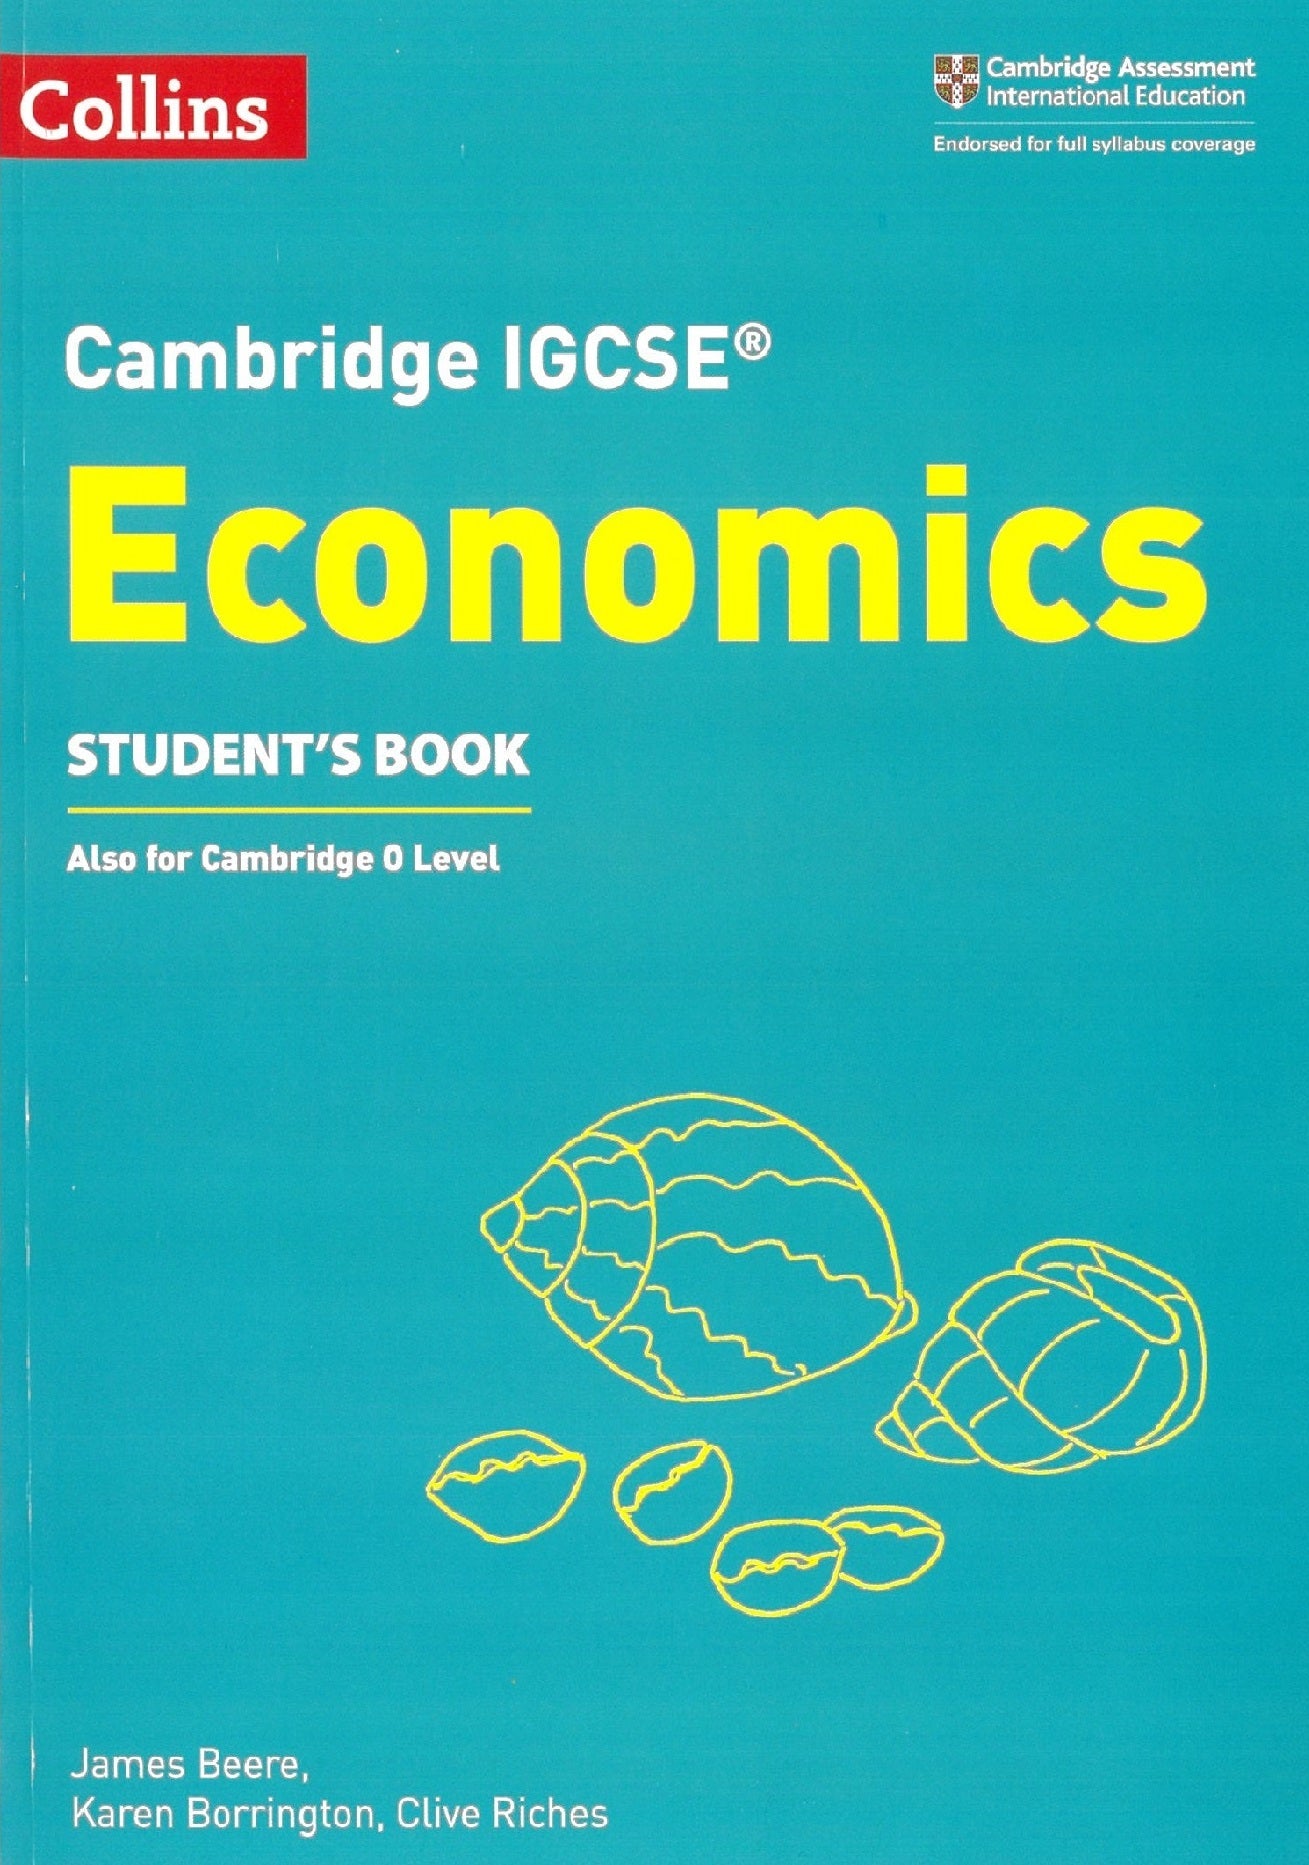 Cambridge IGCSE Economics Student's Book - James Beere - 9780008254094 - HarperCollins